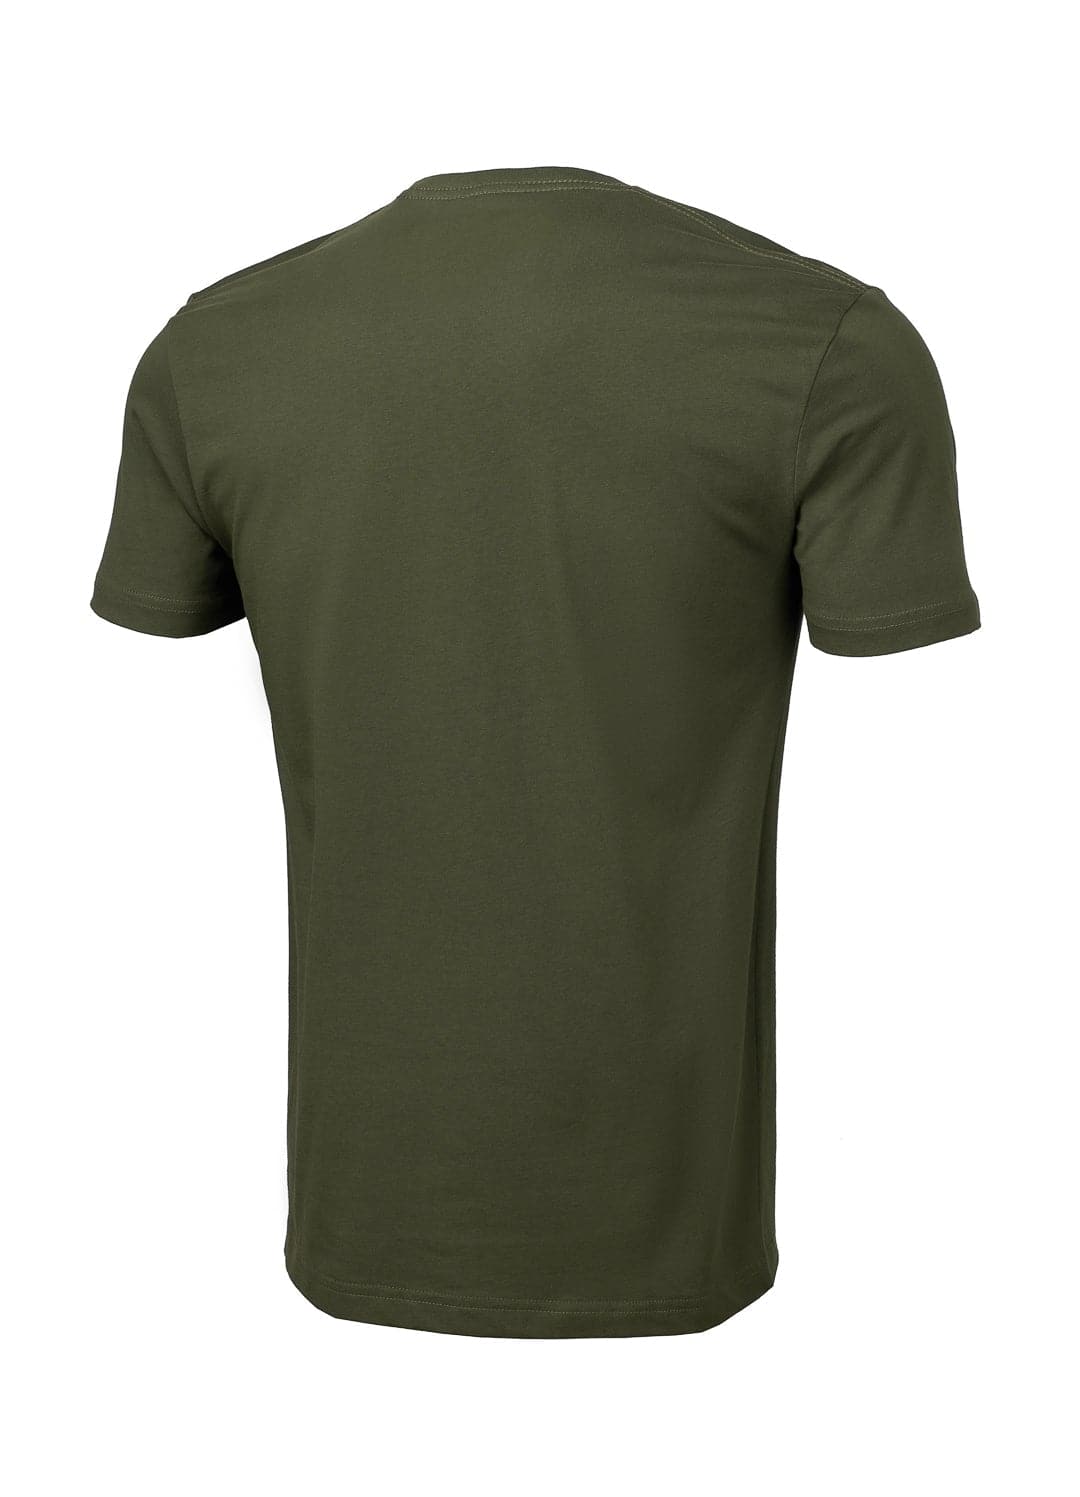 T-shirt Slim Fit SMALL LOGO Olive - Pitbull West Coast International Store 